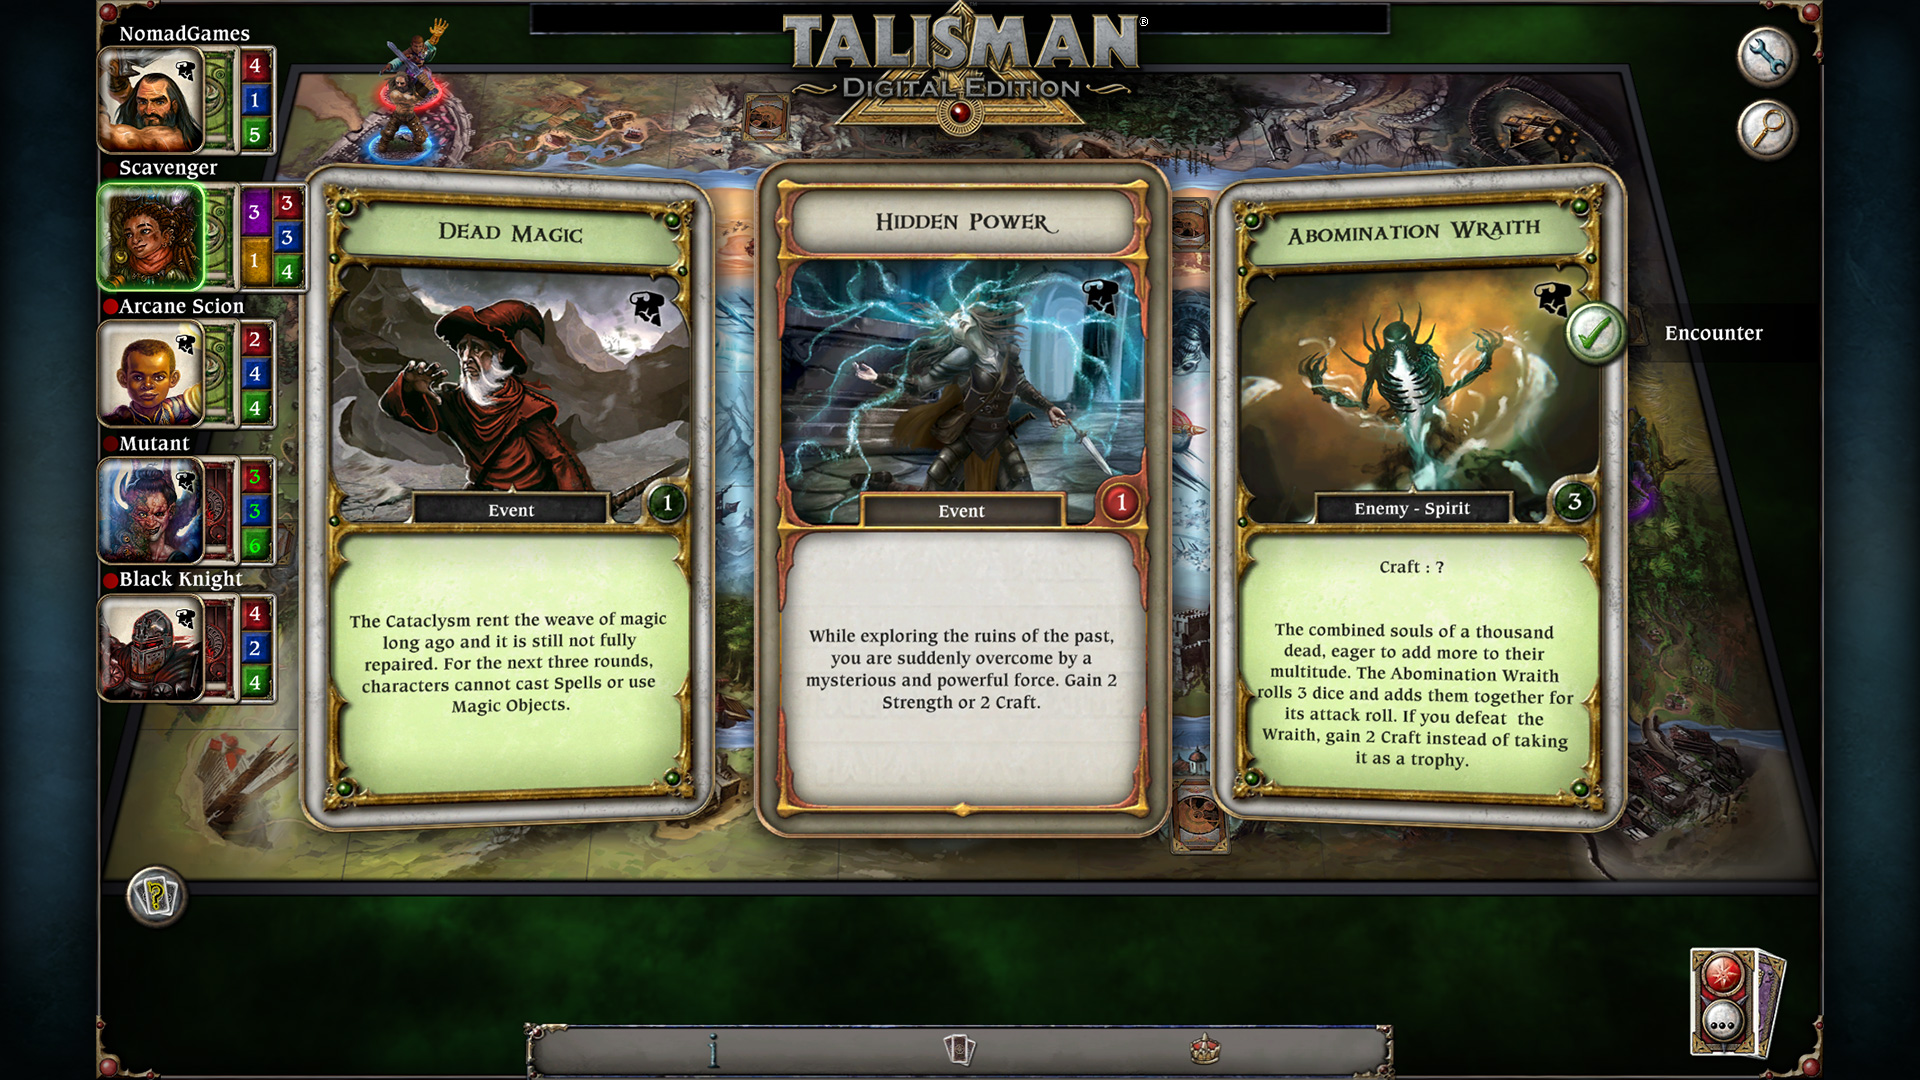 Talisman - The Cataclysm Expansion DLC Steam CD Key 3.71 USD